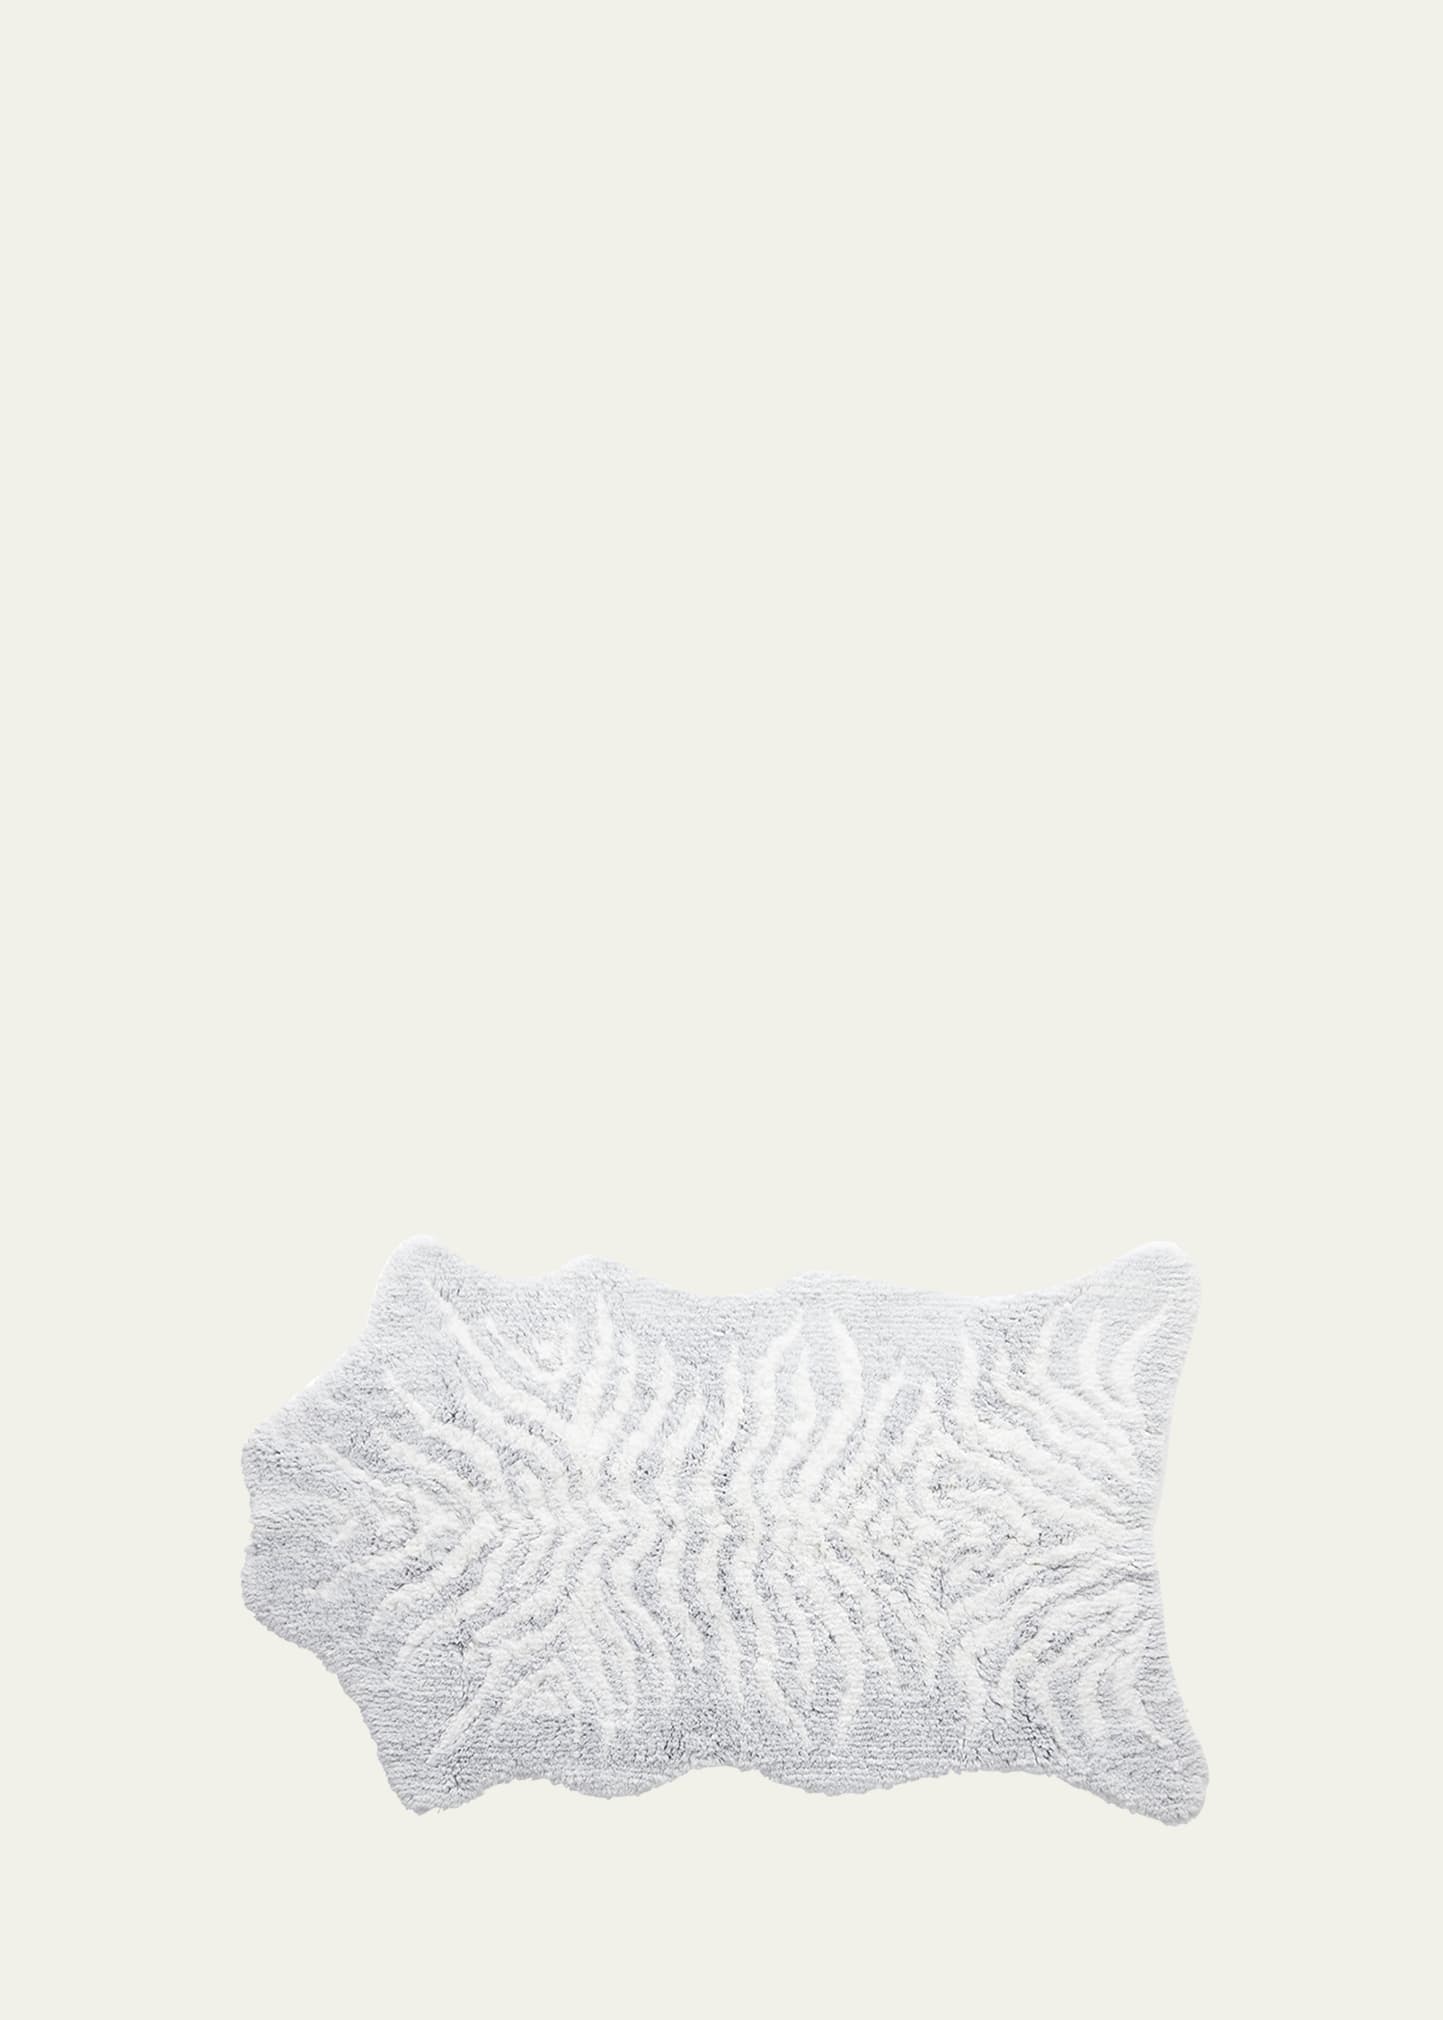 Graccioza Mountain Zebra Bath Rug, 35" x 59"